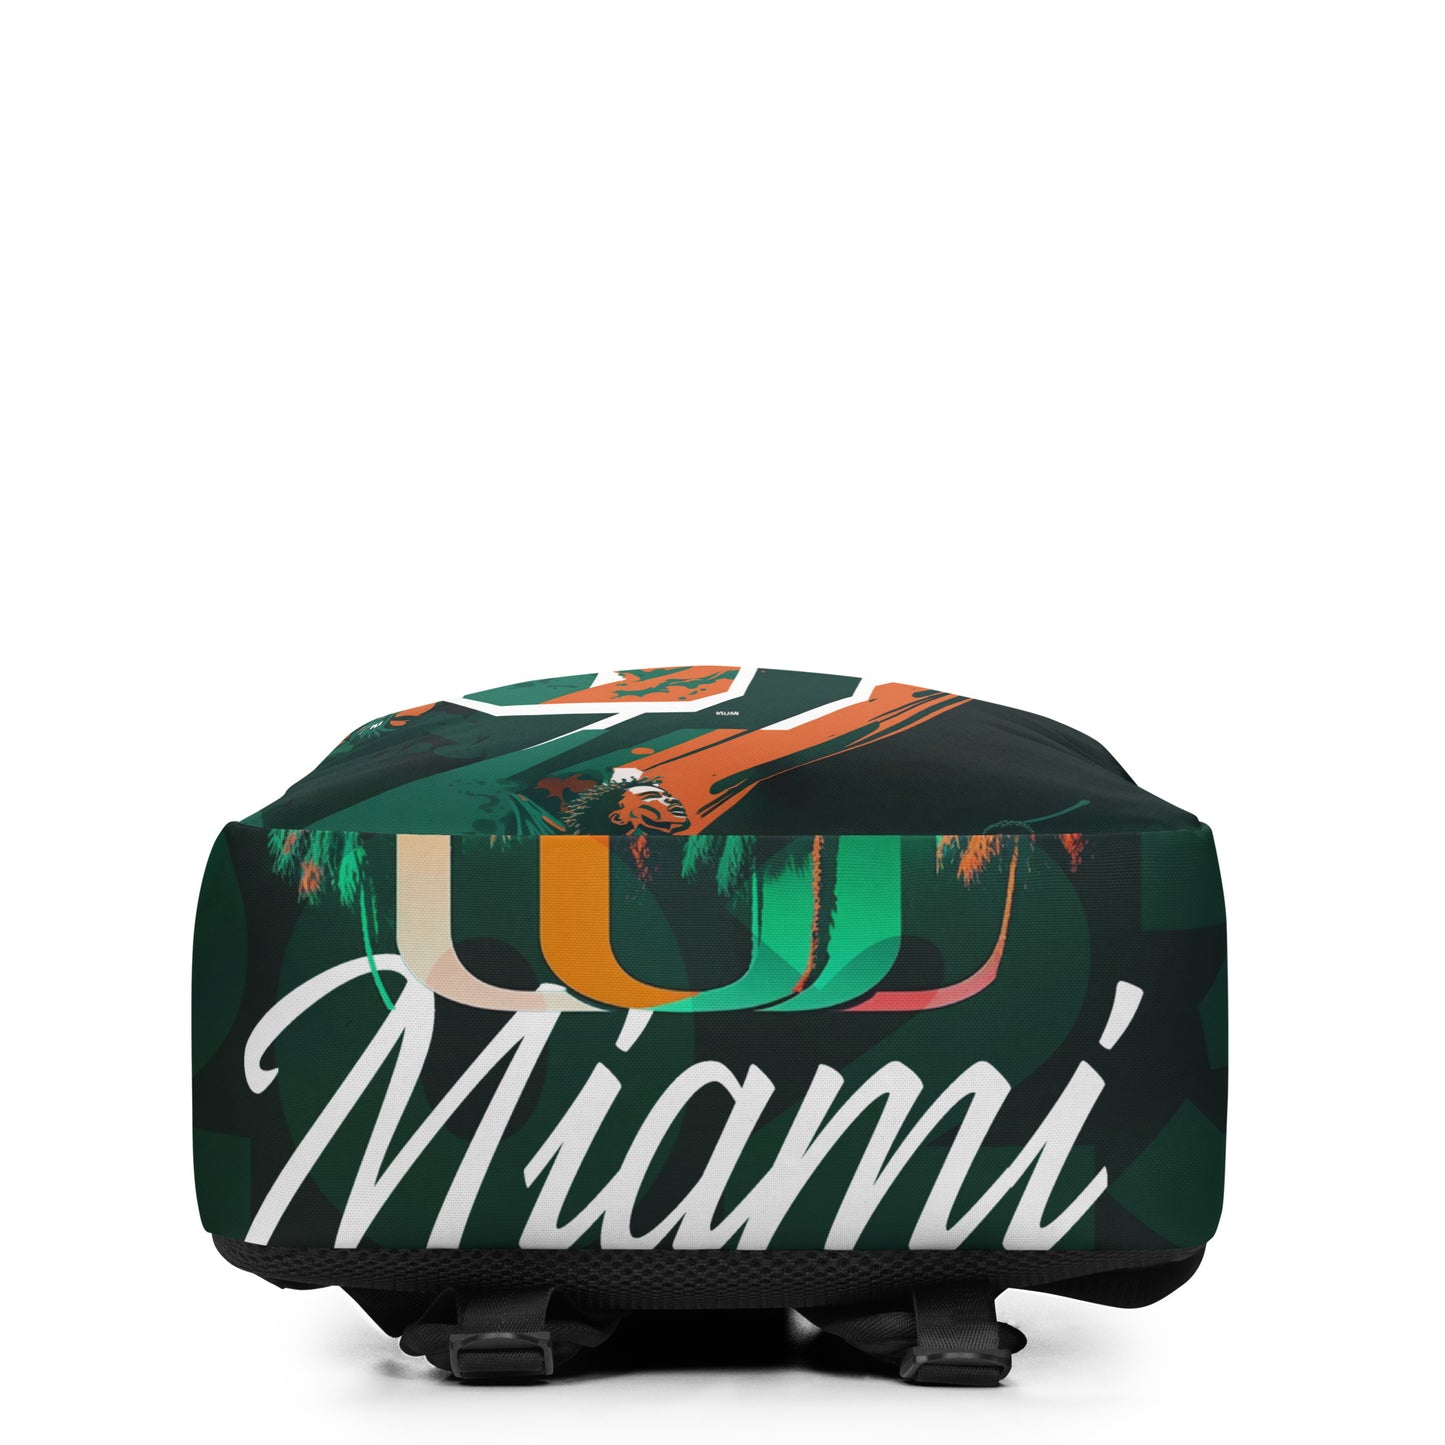 Miami Madness - Minimalist Backpack